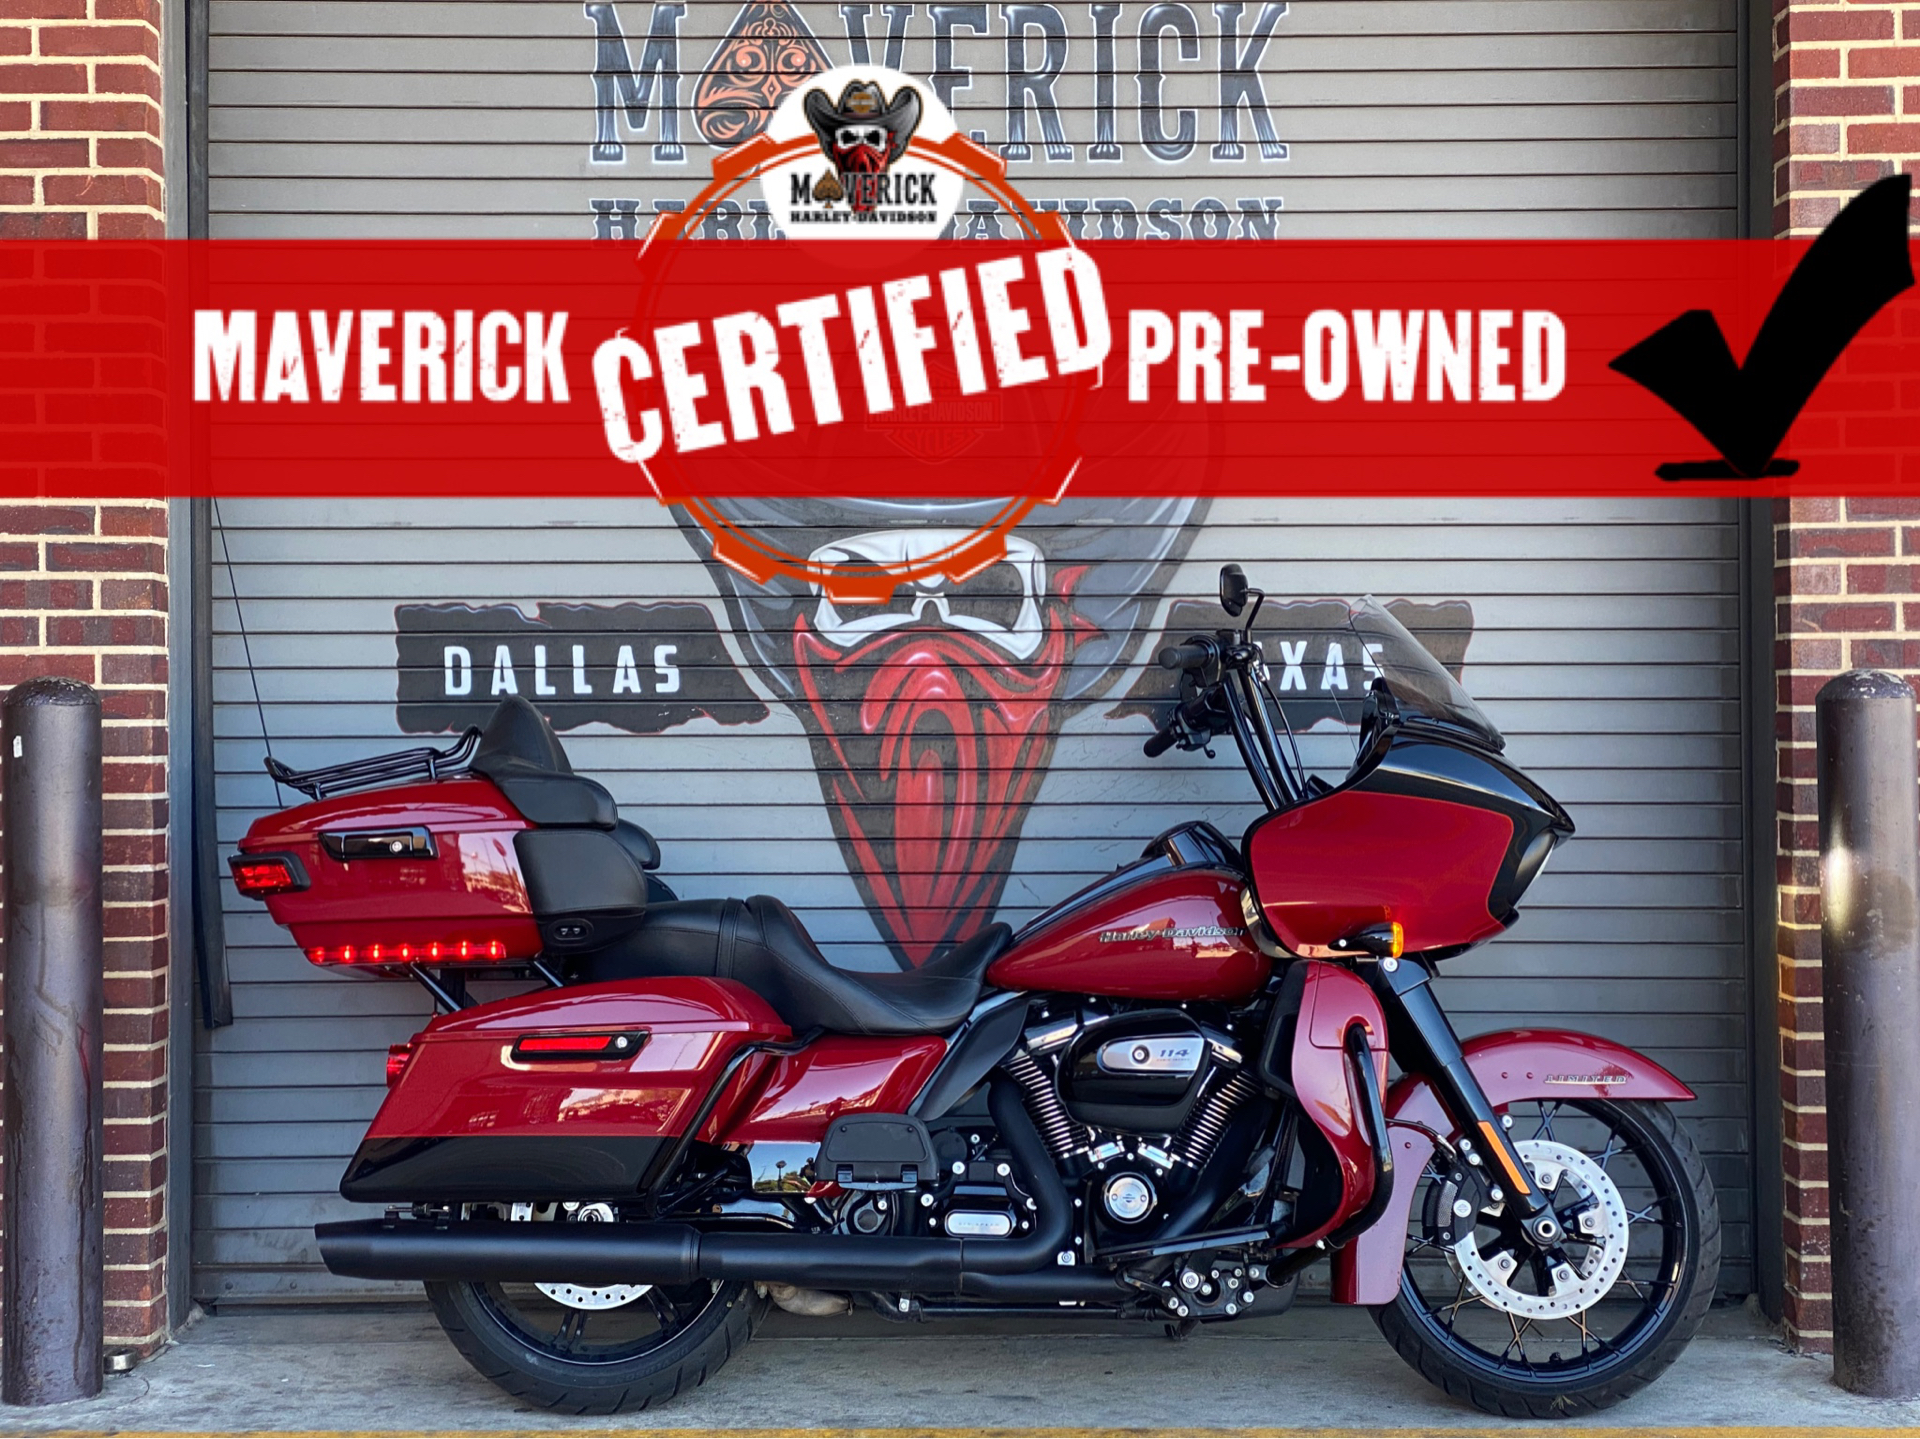 2020 Harley-Davidson Road Glide® Limited in Carrollton, Texas - Photo 1